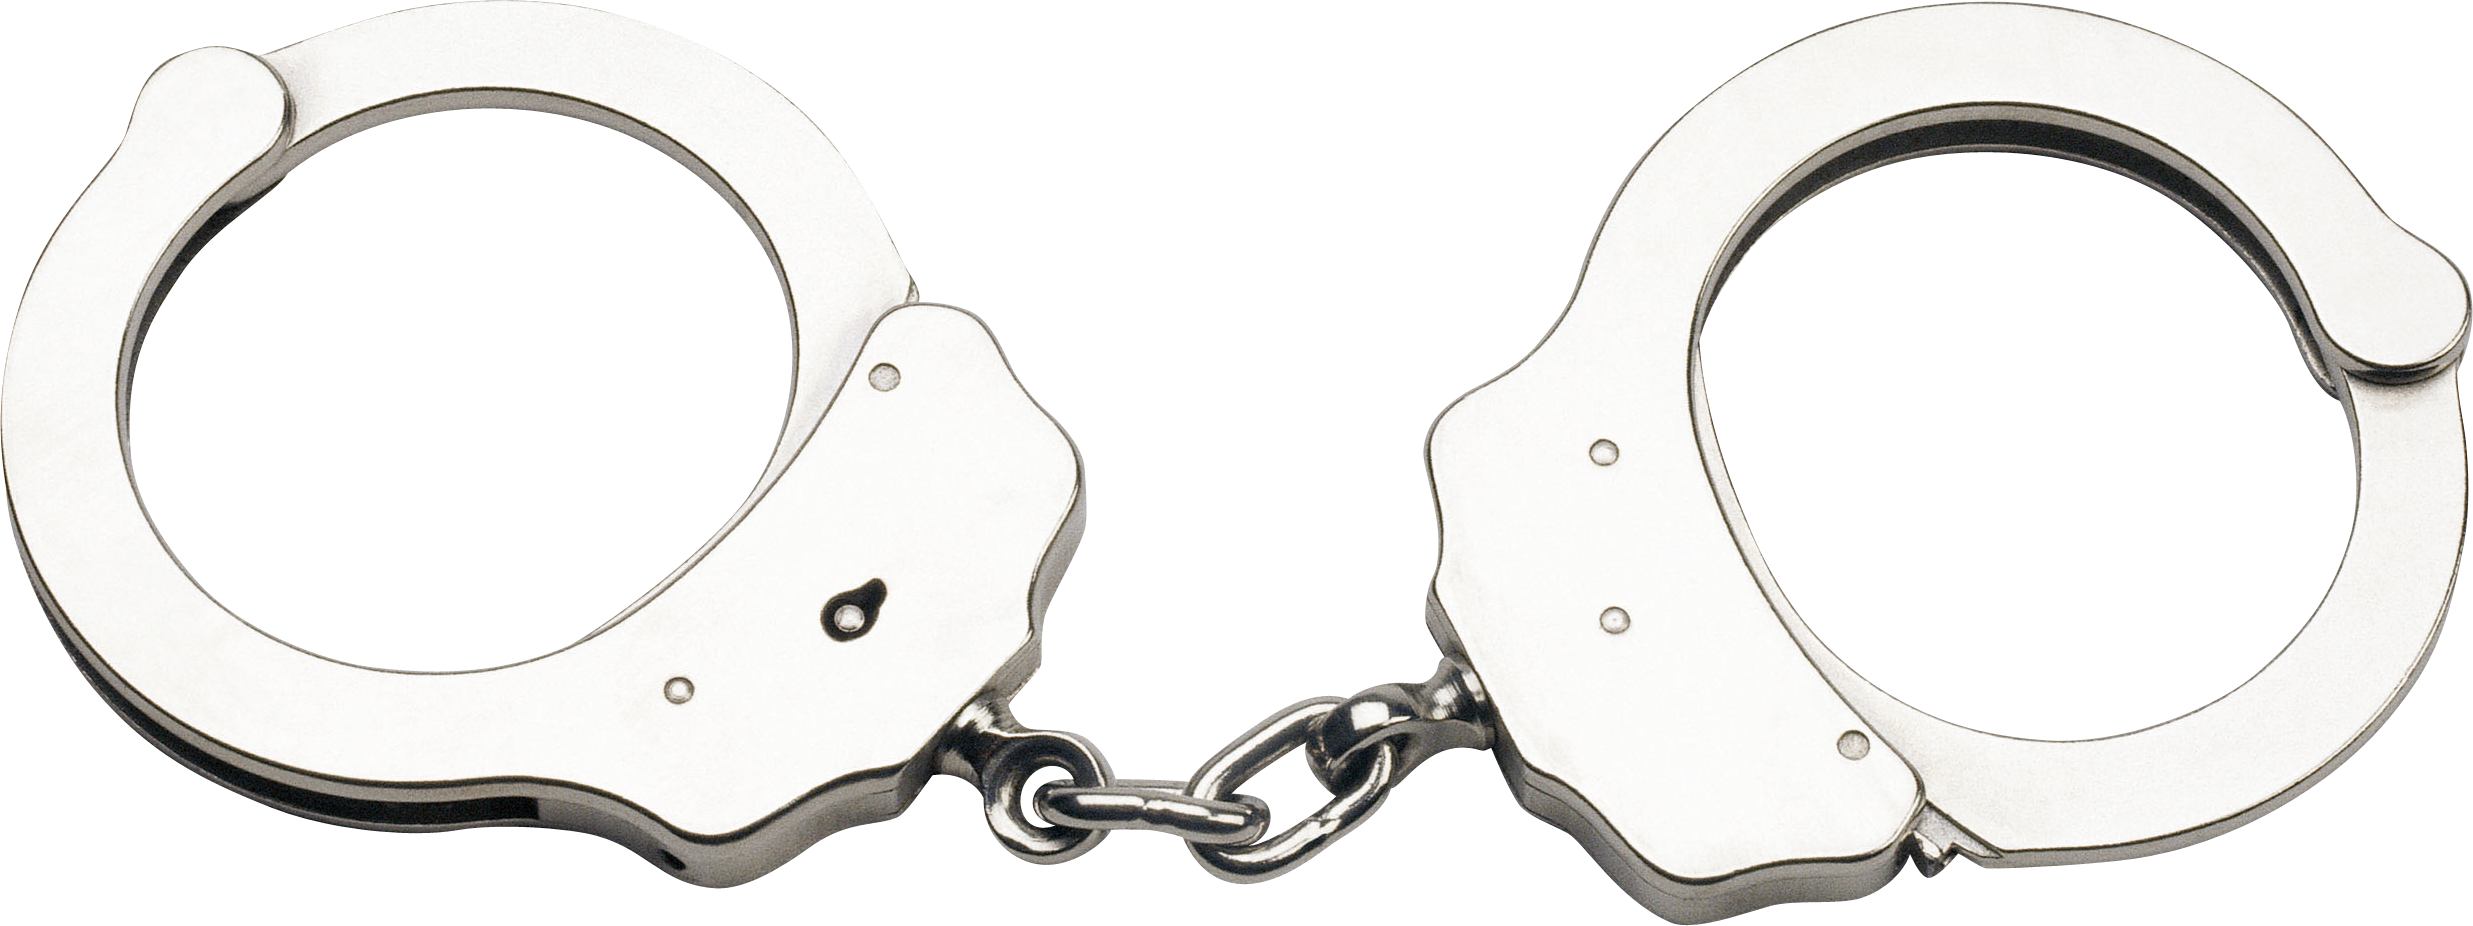 Handcuffs PNG